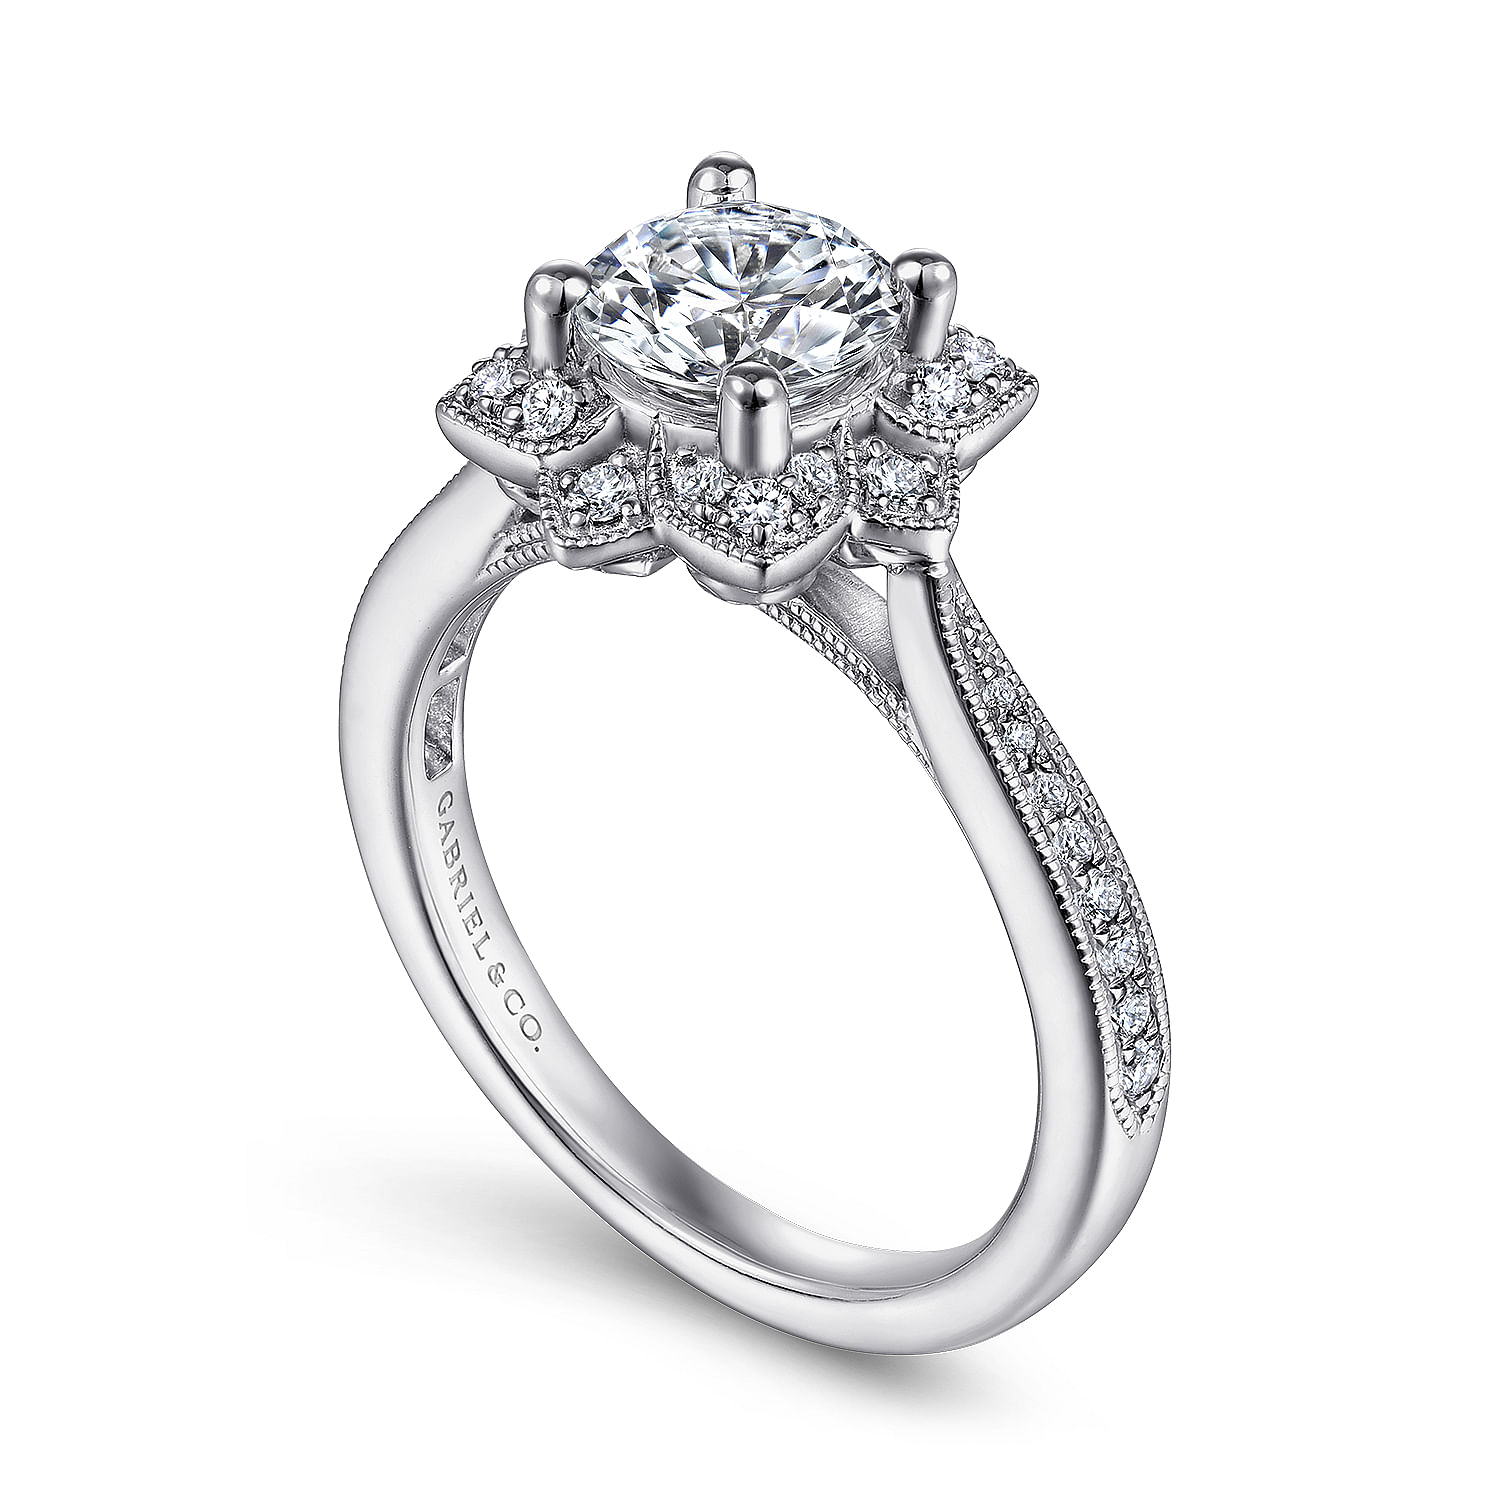 Gretel - Unique 14K White Gold Vintage Inspired Halo Diamond Engagement Ring - 0.21 ct - Shot 3